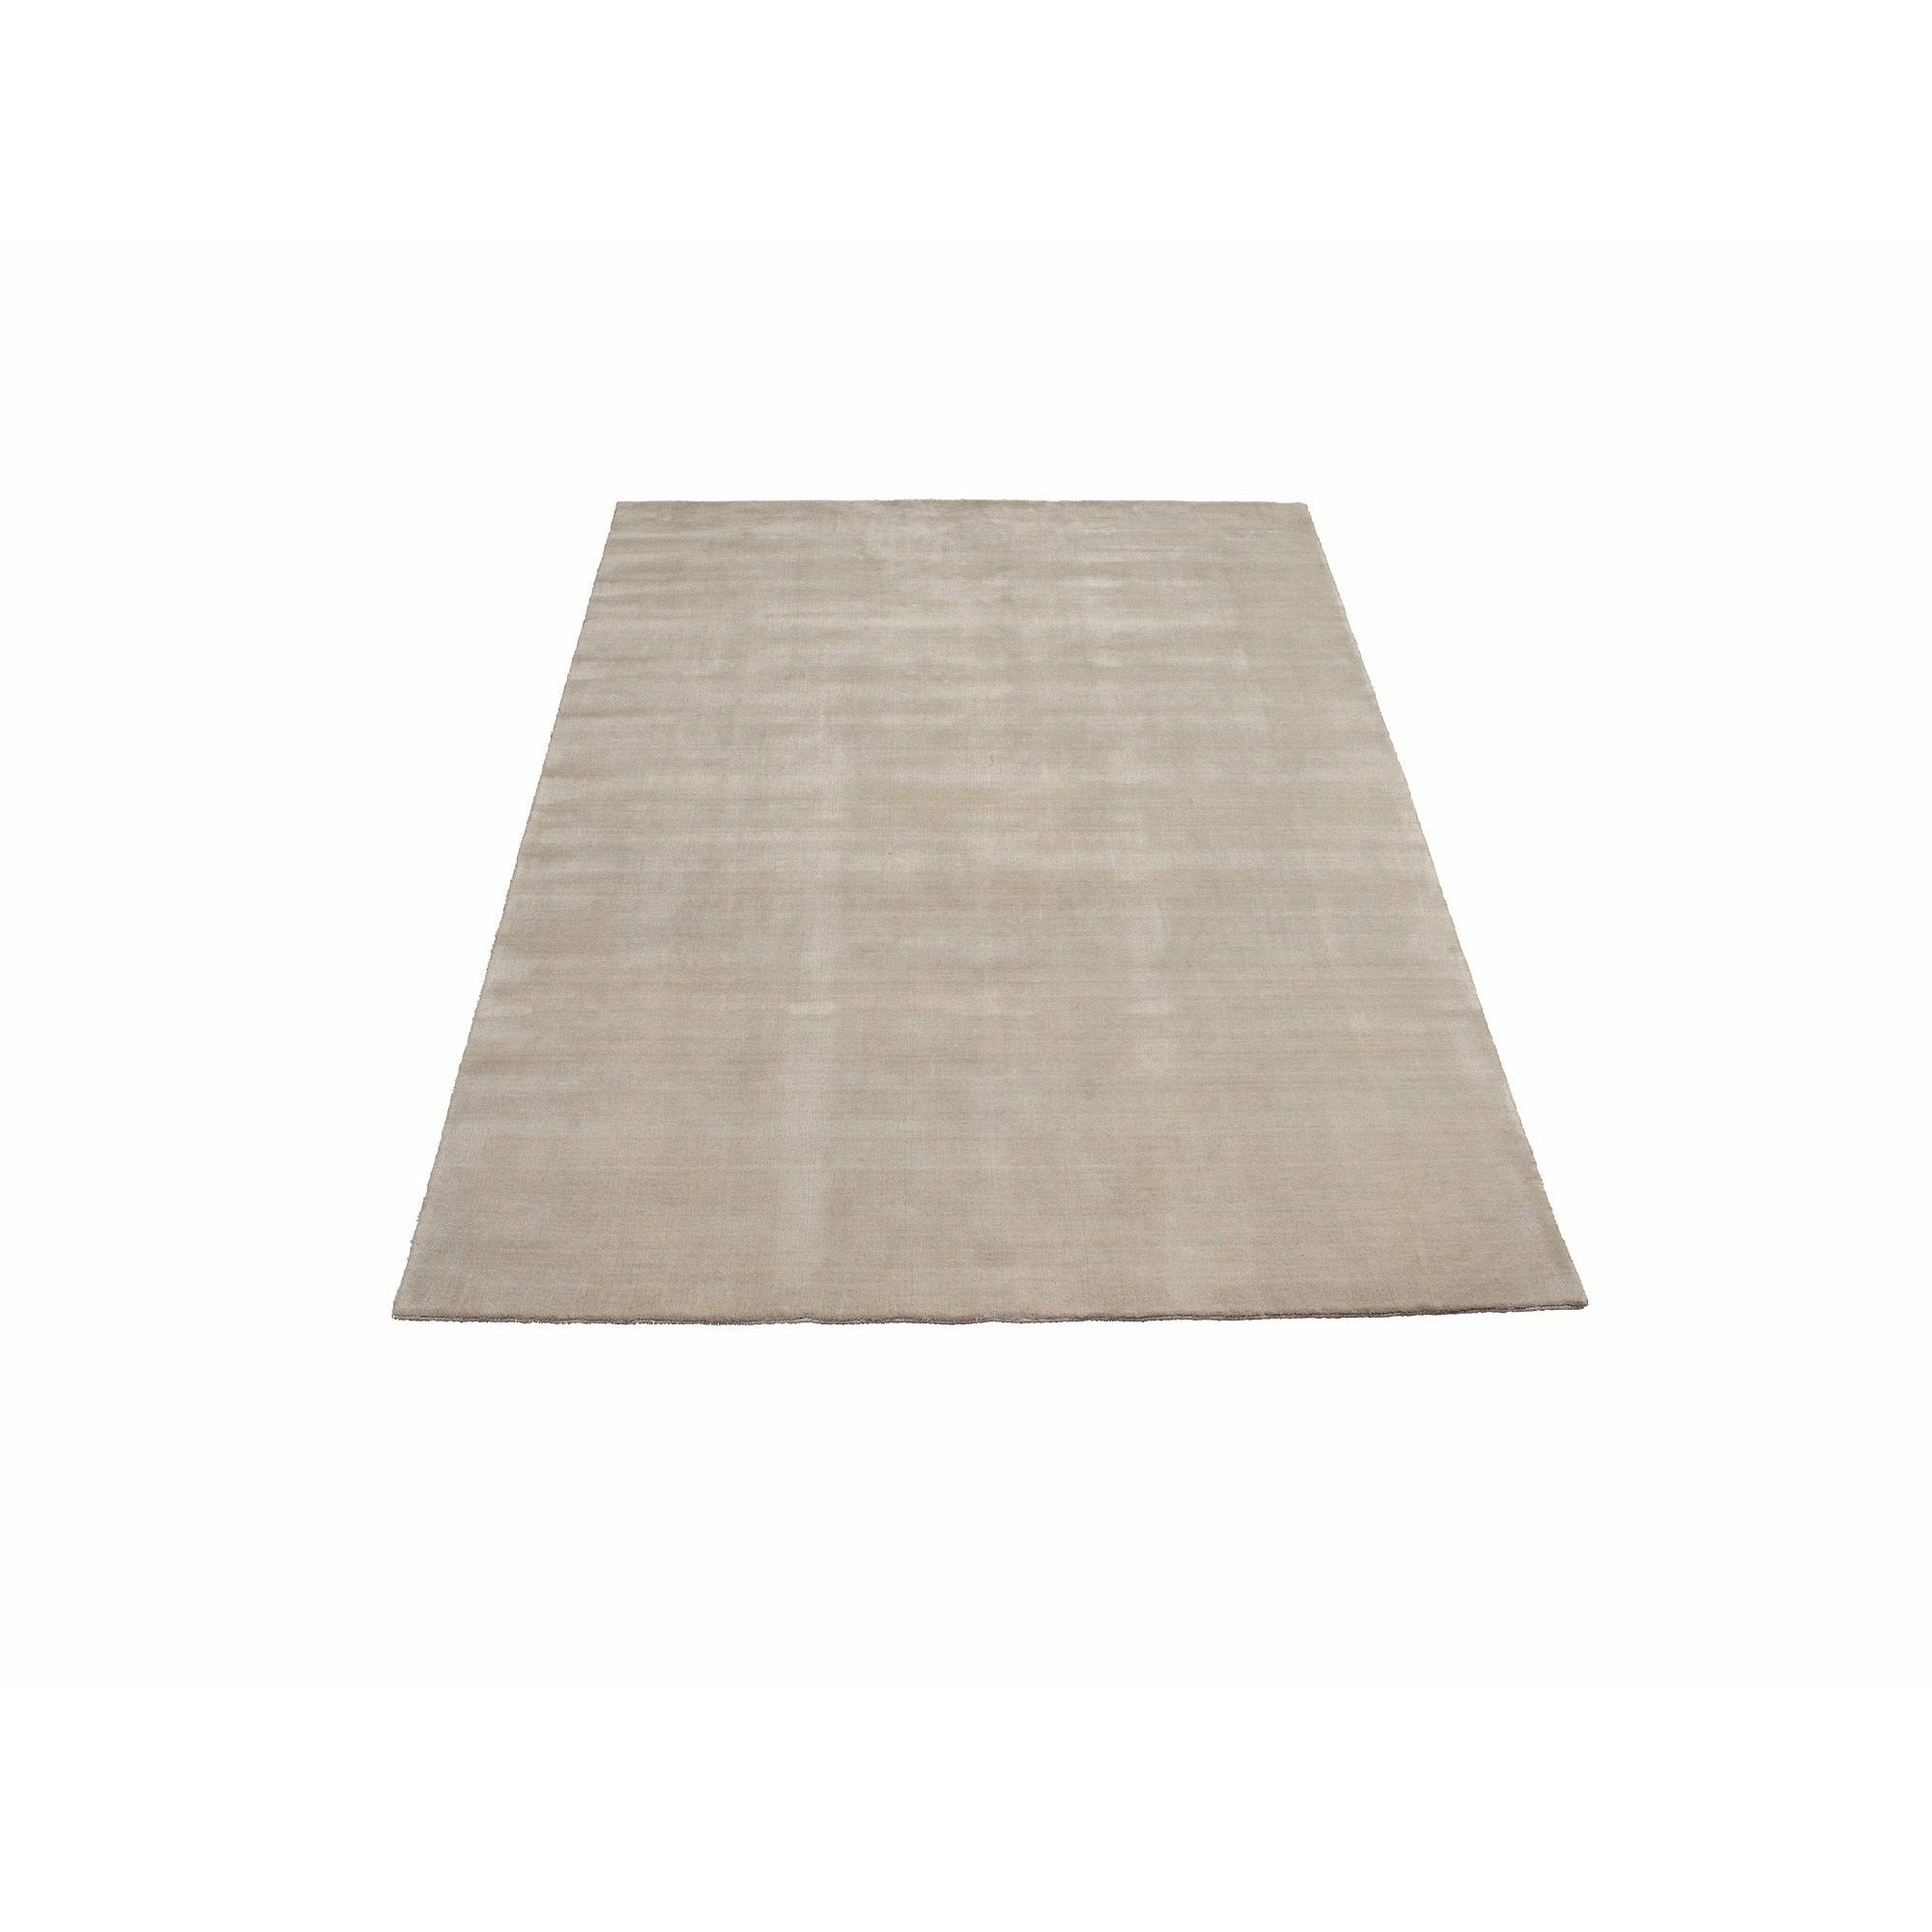 Massimo Earth Bamboo alfombra suave gris, 200x300 cm